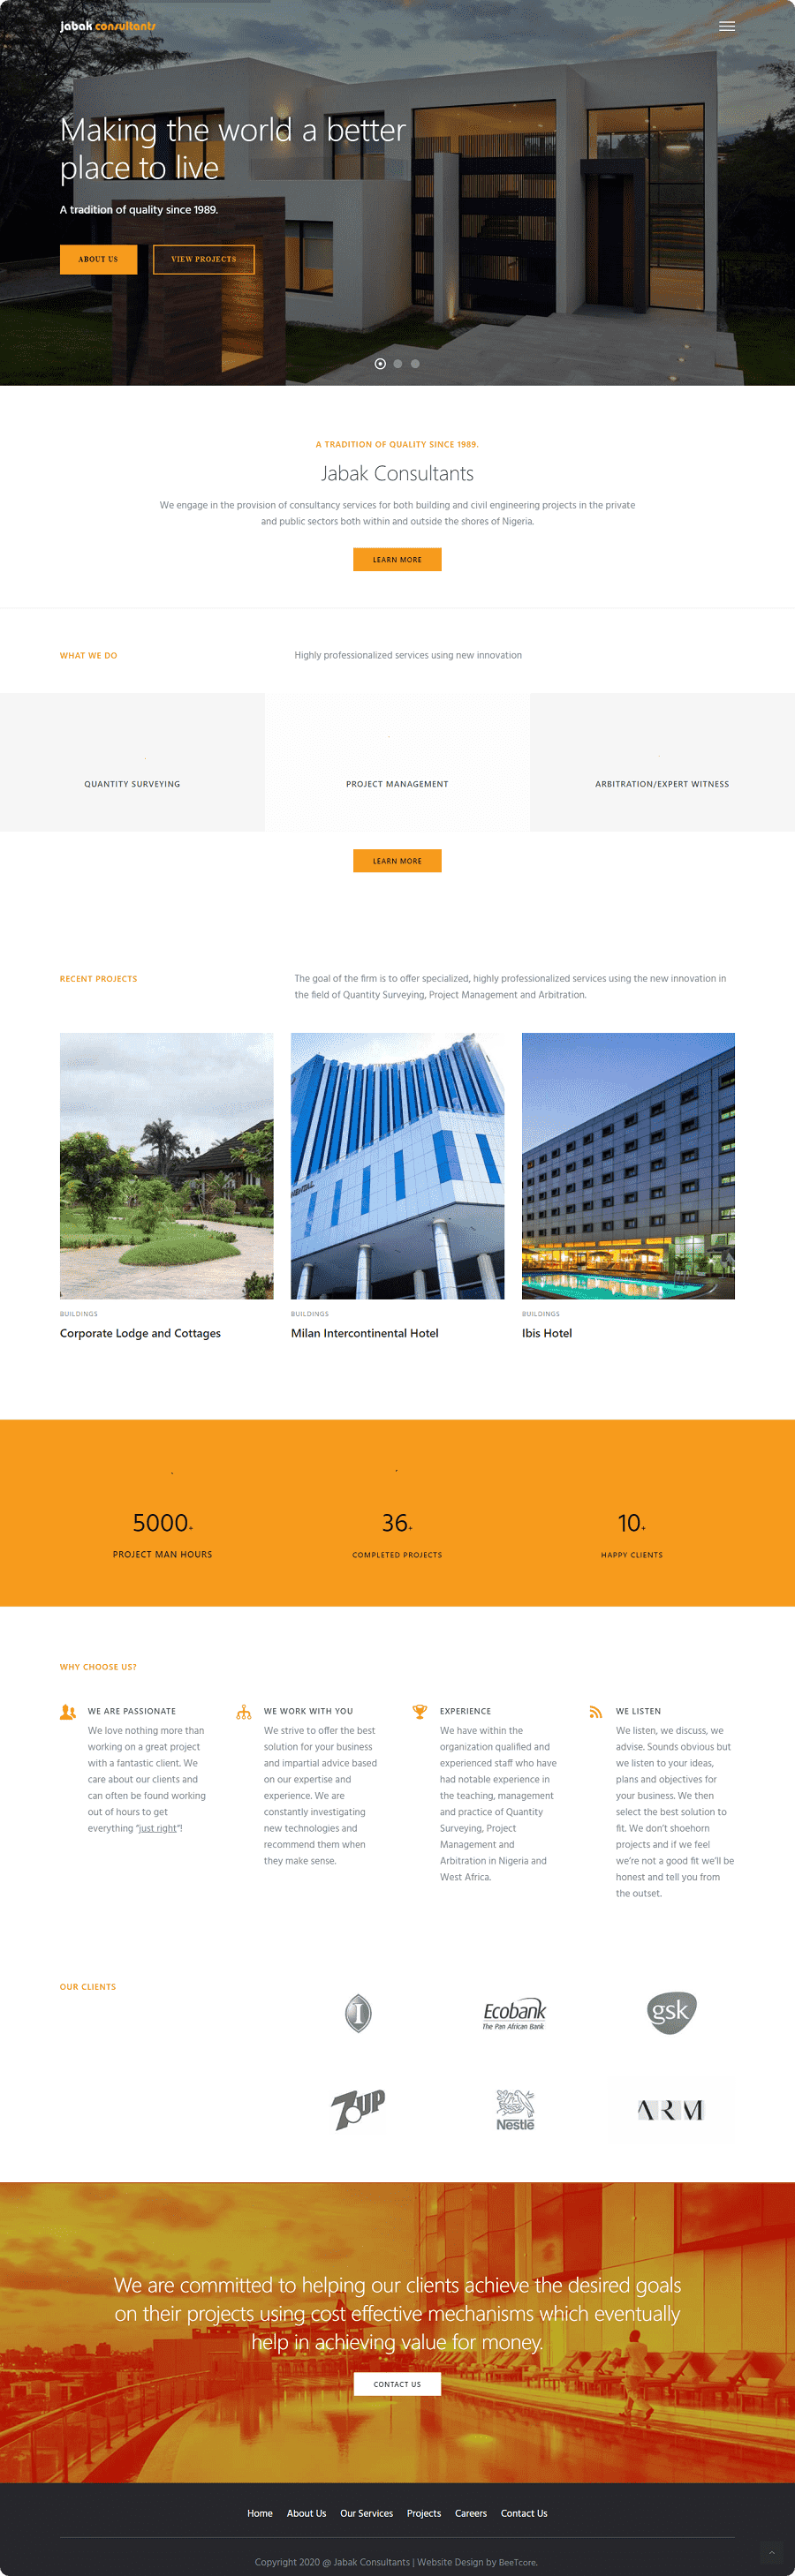 BeeTcore Digital Product Design & Development Agency | Portfolio | Website Development | WordPress | Lagos Nigeria | Homepage | Jabak Consultants